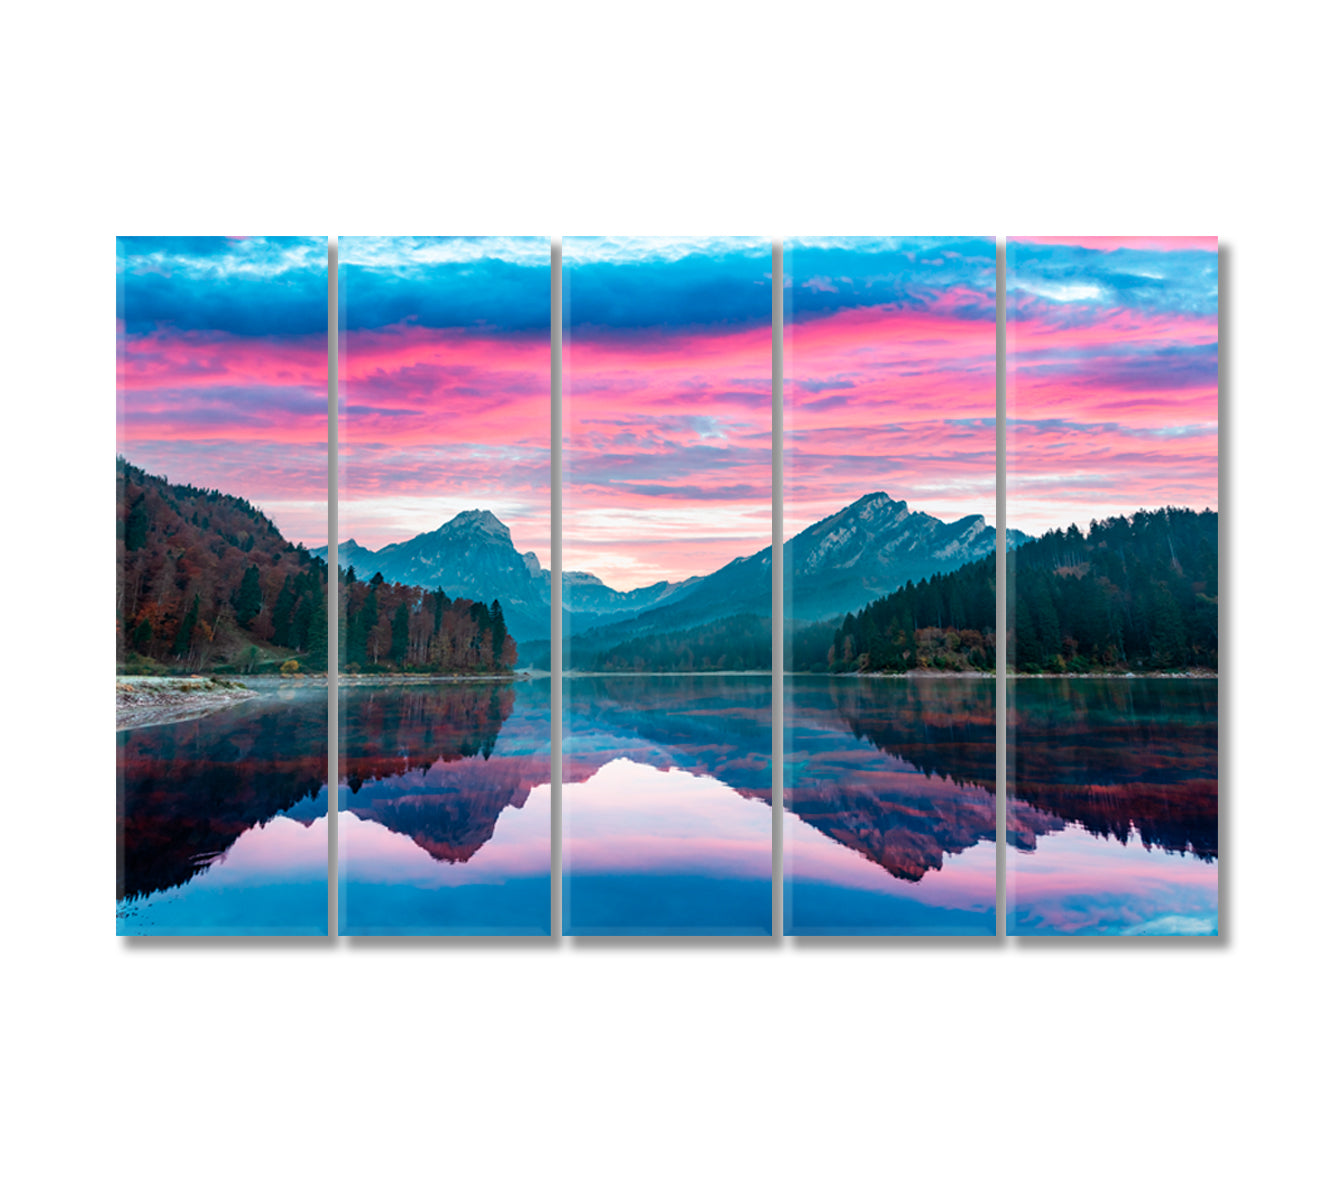 Dramatic Sunset at Obersee Lake Swiss Alps Switzerland Canvas Print-Canvas Print-CetArt-5 Panels-36x24 inches-CetArt